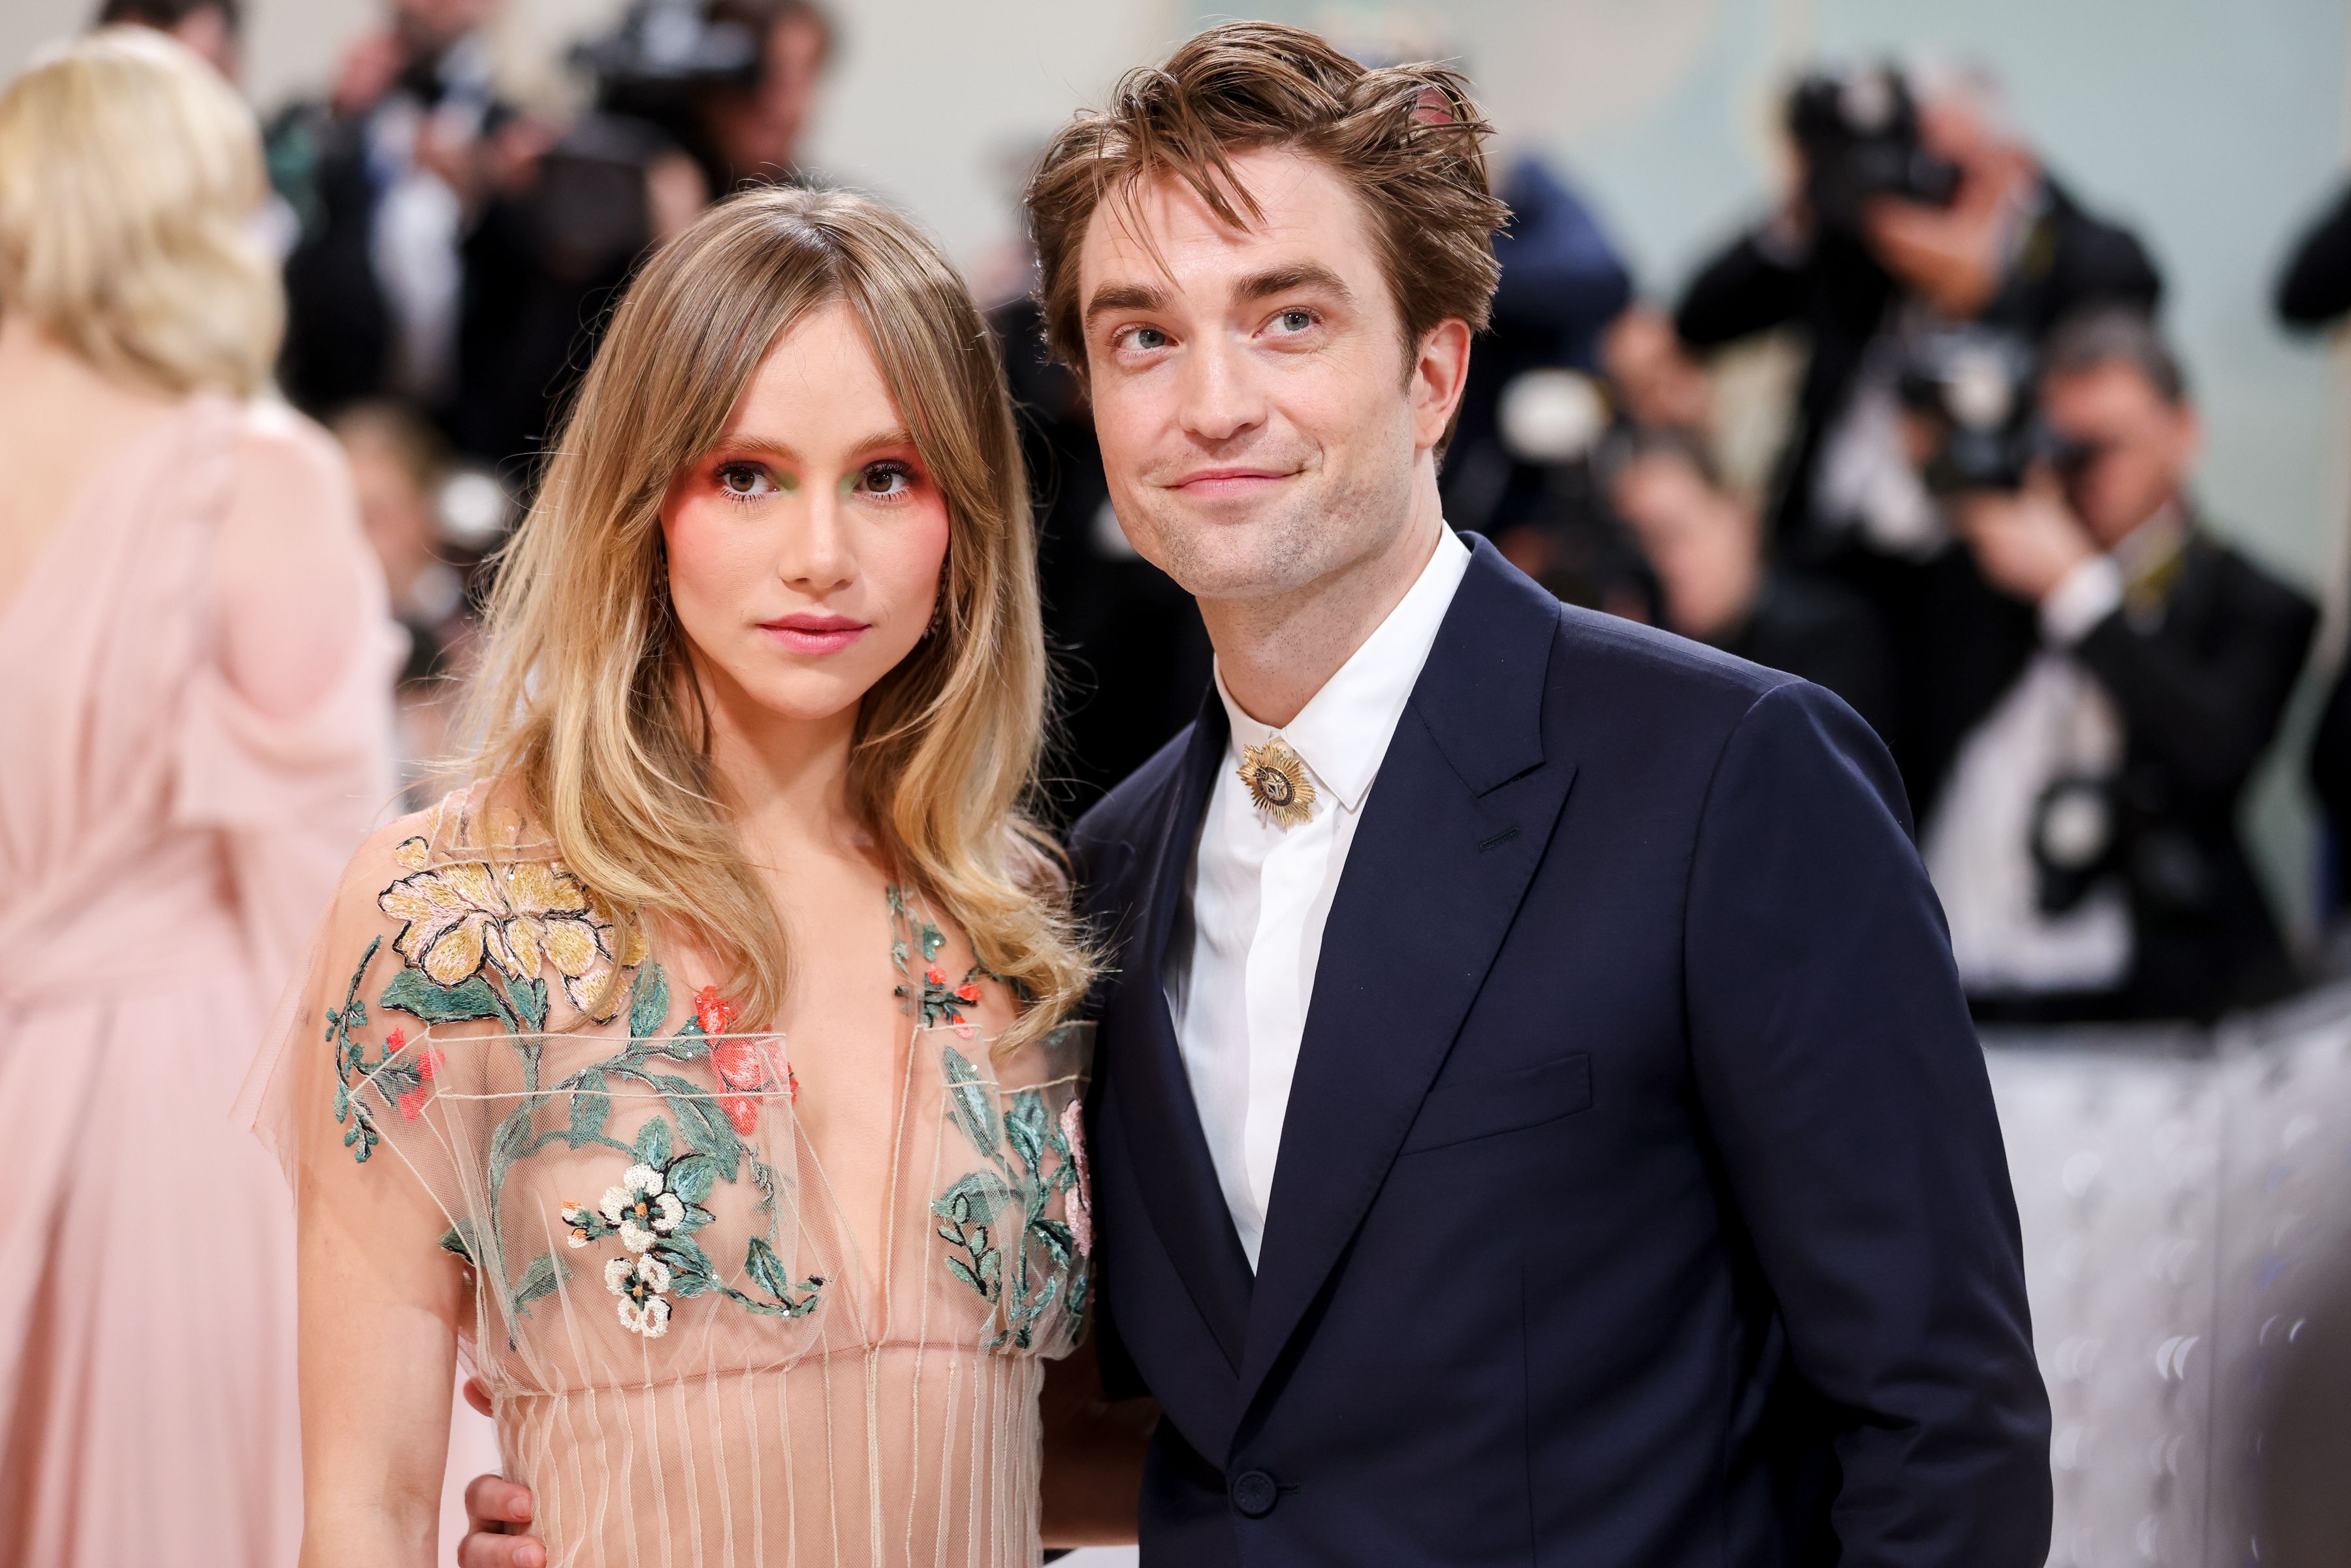 Robert Pattinson Girlfriend Suki Waterhouse Music, Acting, More